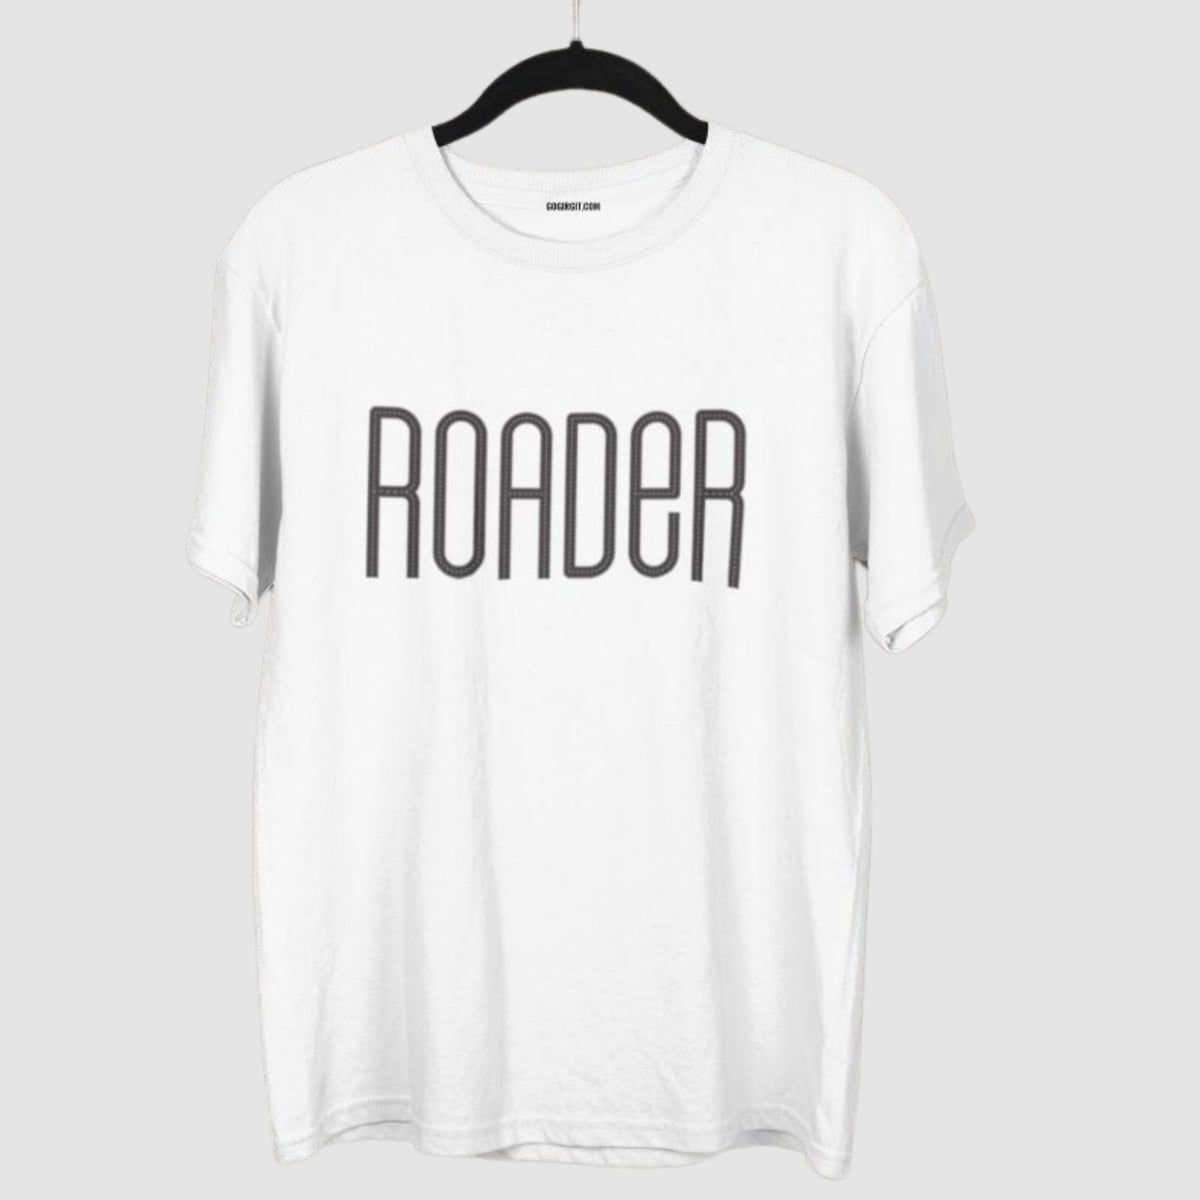 Roader white t-shirt